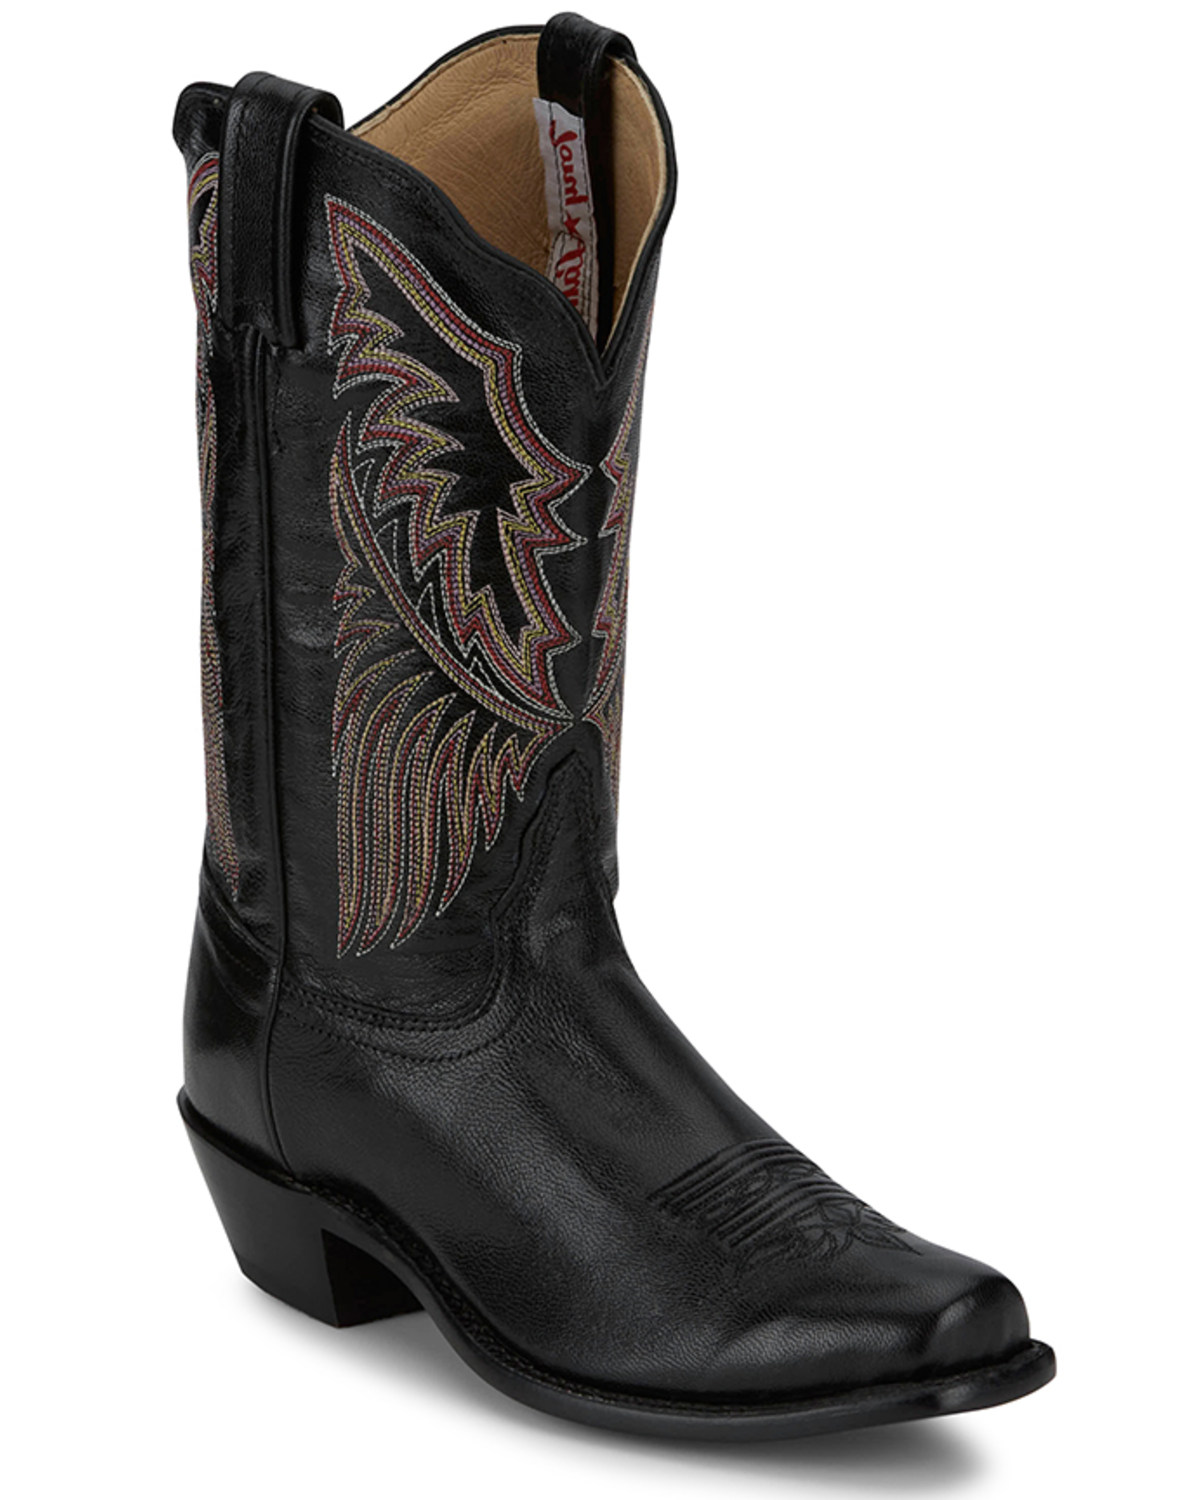 Tony Lama Women's Sagrada Western Boots